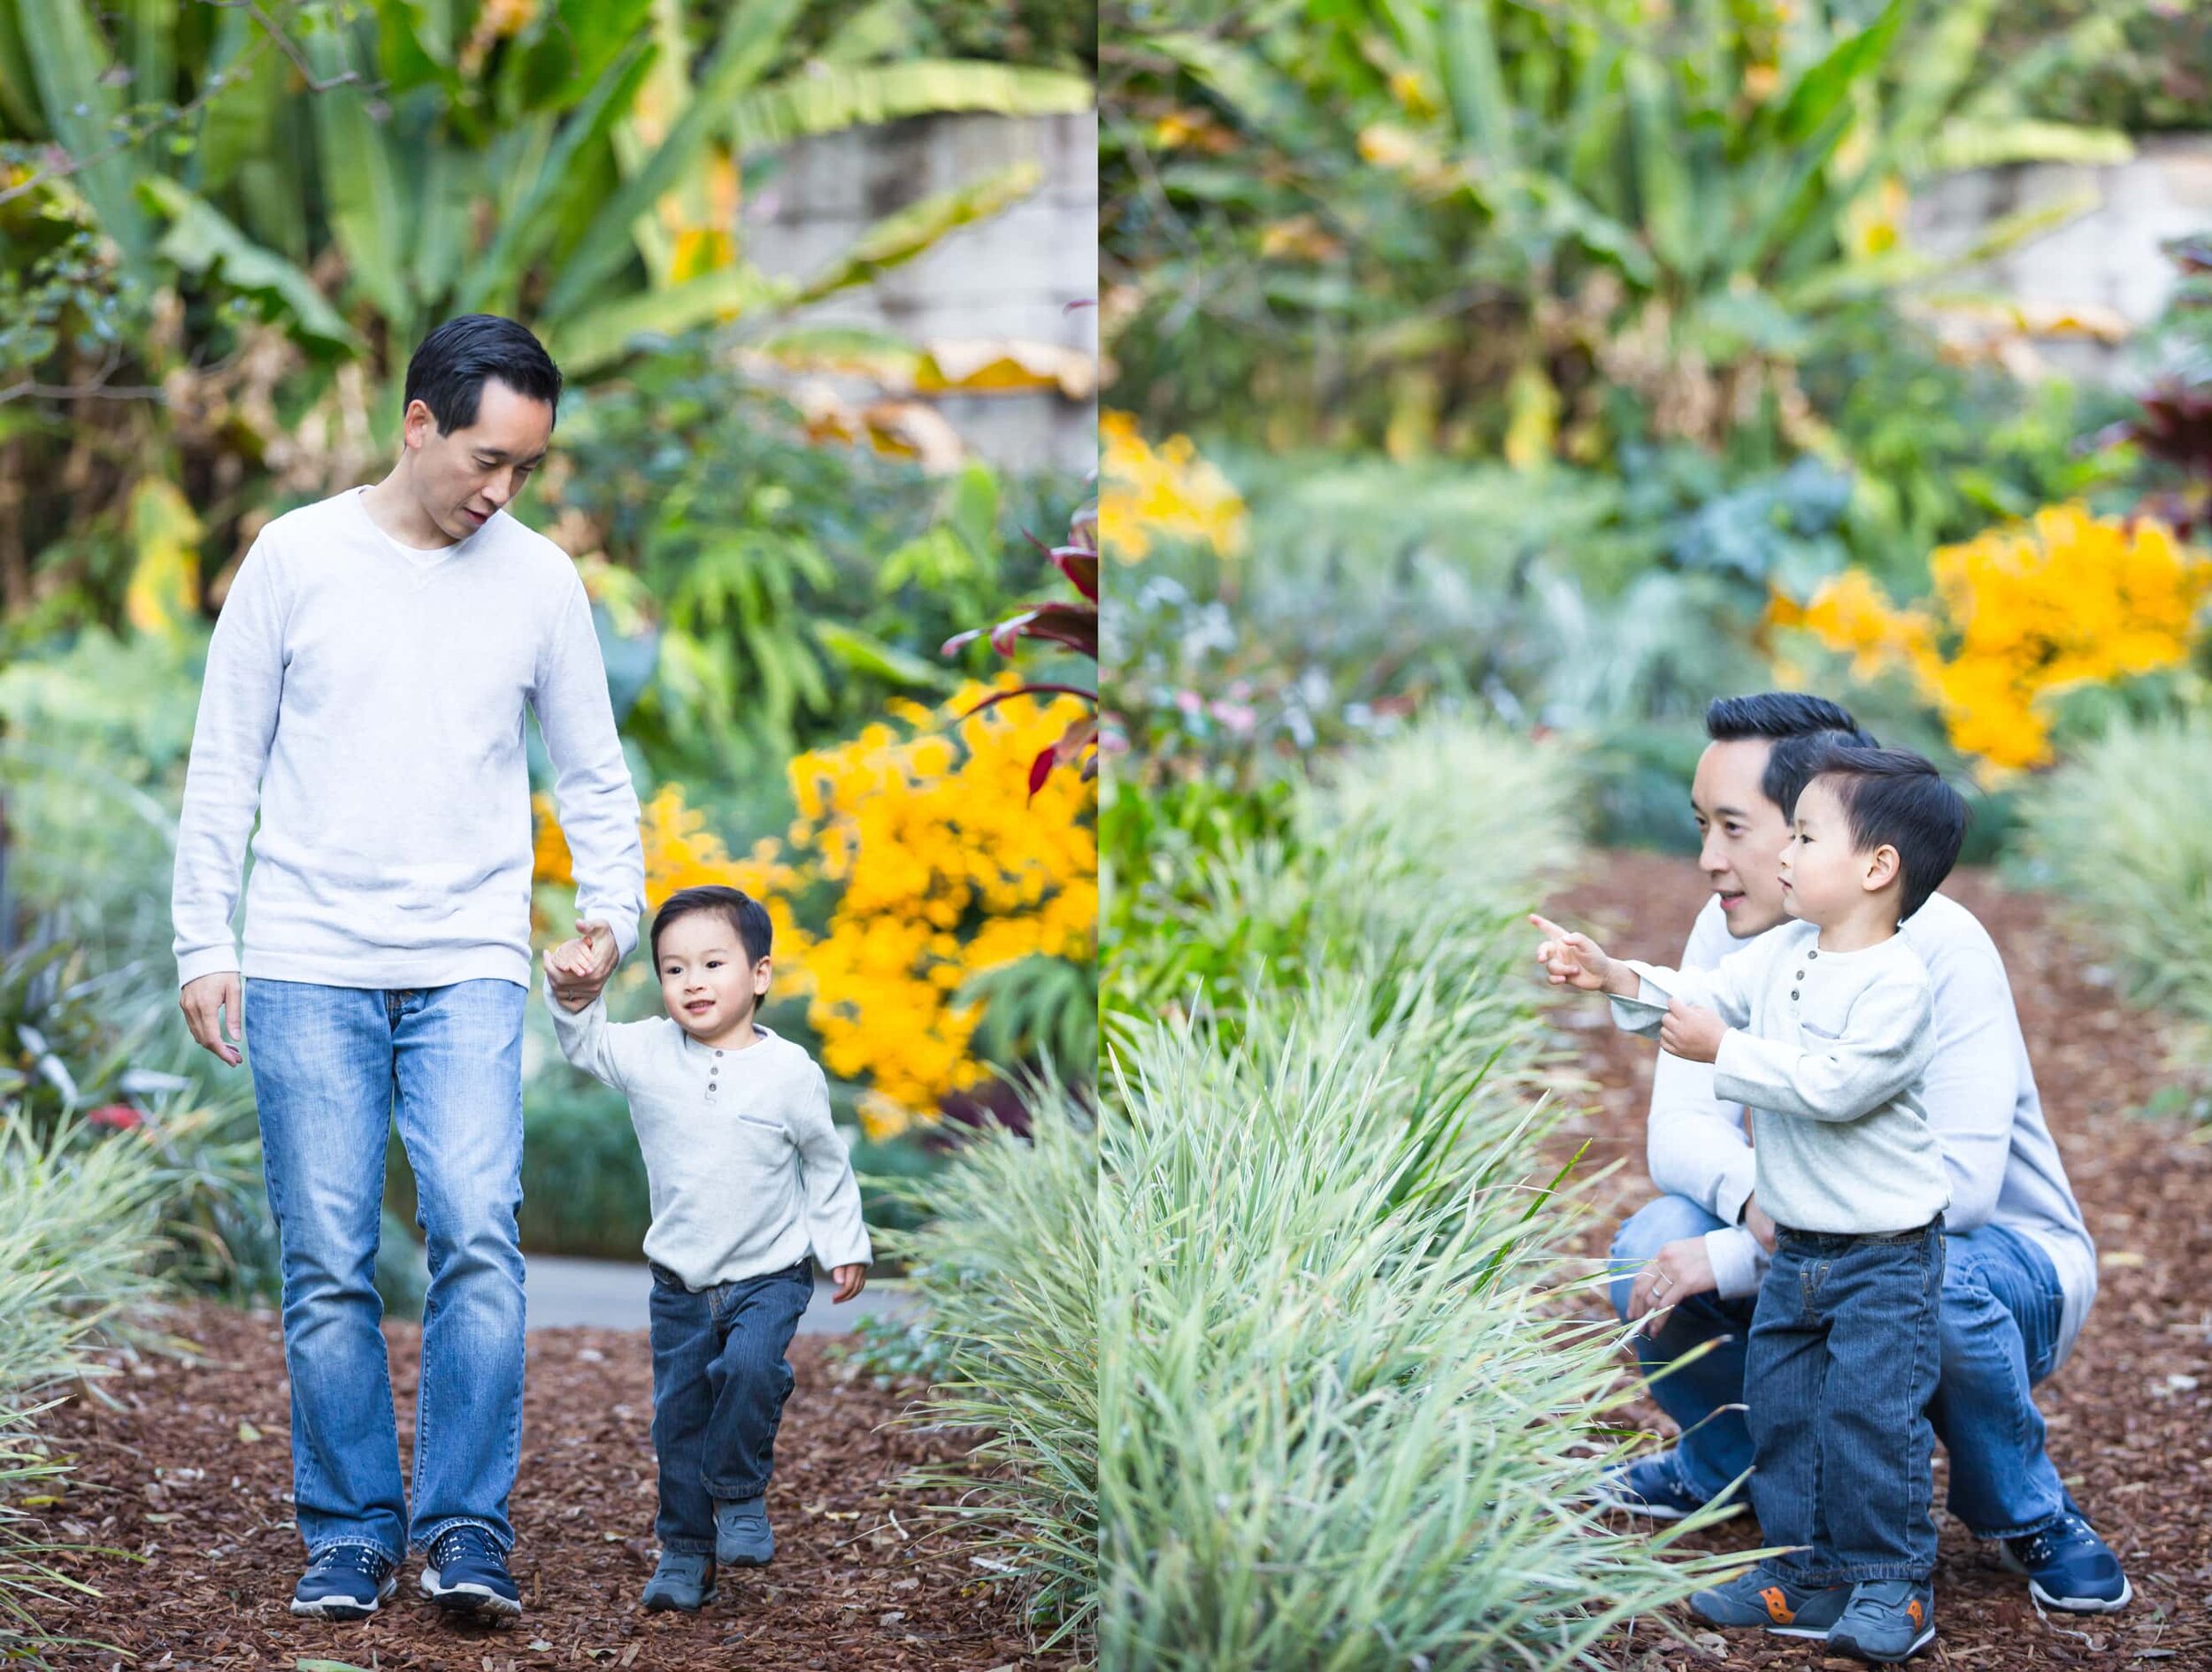 Sydney-family-photographer-outdoor-family-photoshoot-Sydney-Royal-Botanic-Gardens-(9).jpg